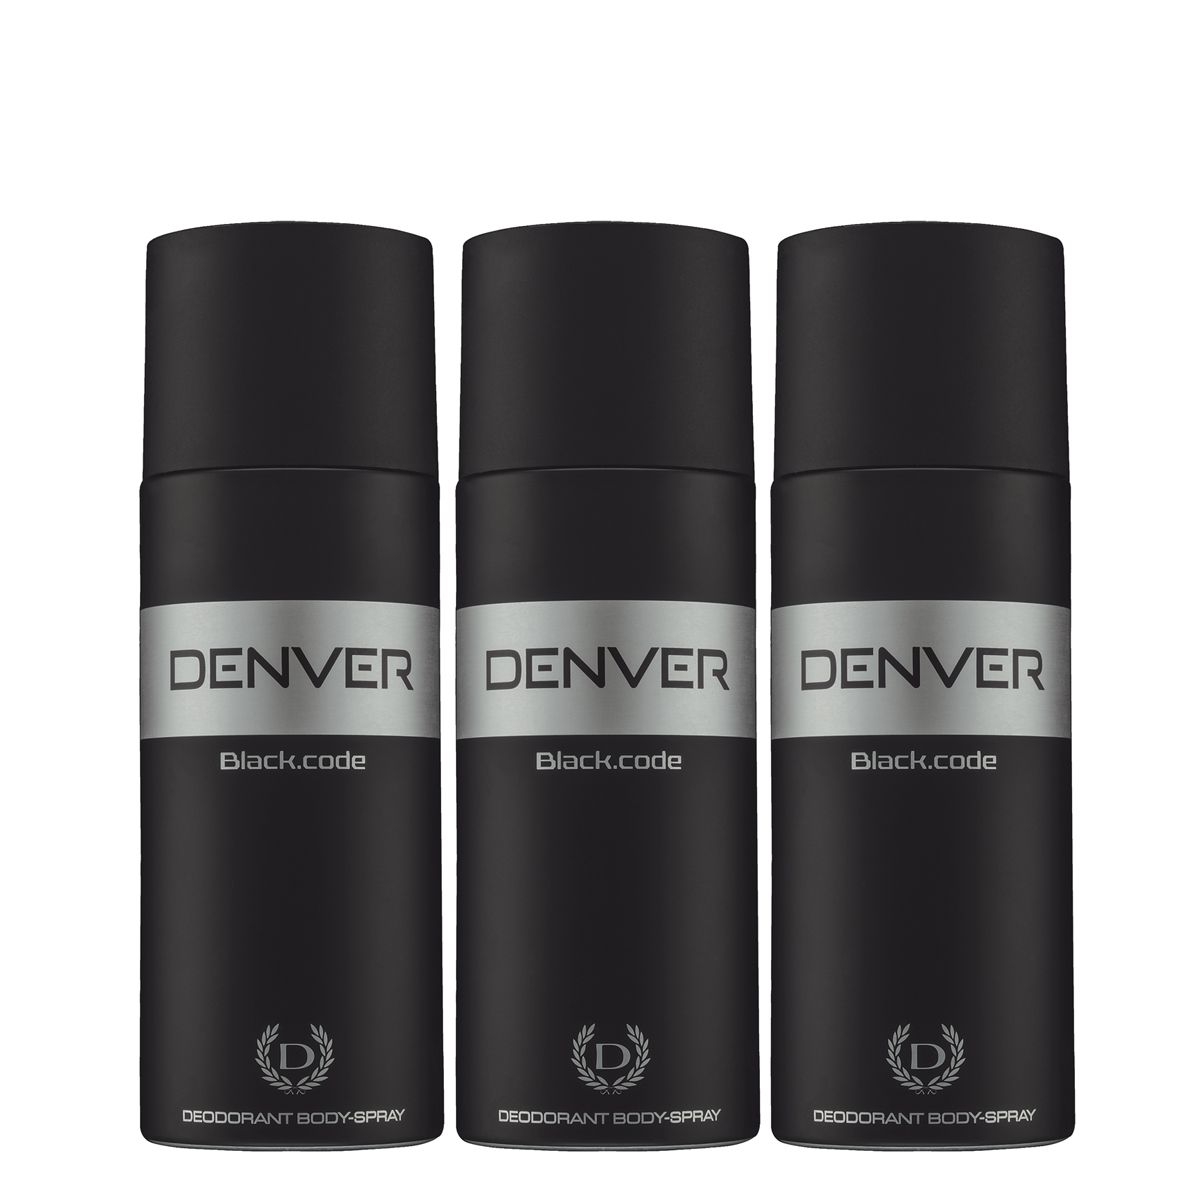     			Denver Black Code Deodorant Body Spray 150Gm Each (Pack Of 3)